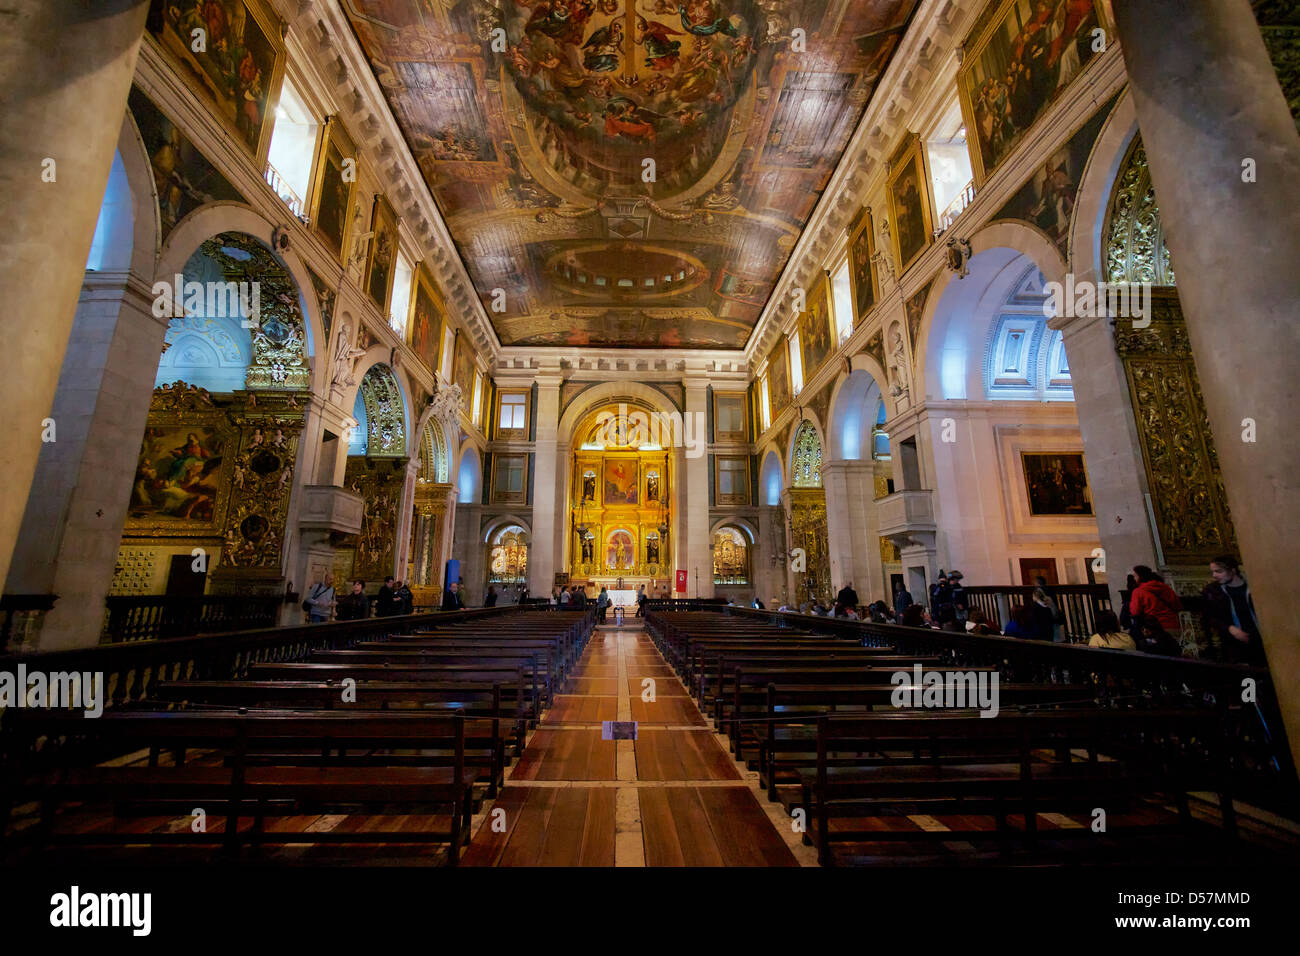 The interior of the Igreja de São Roque (Church of Saint Roch) in Lisbon, Portugal. Stock Photo